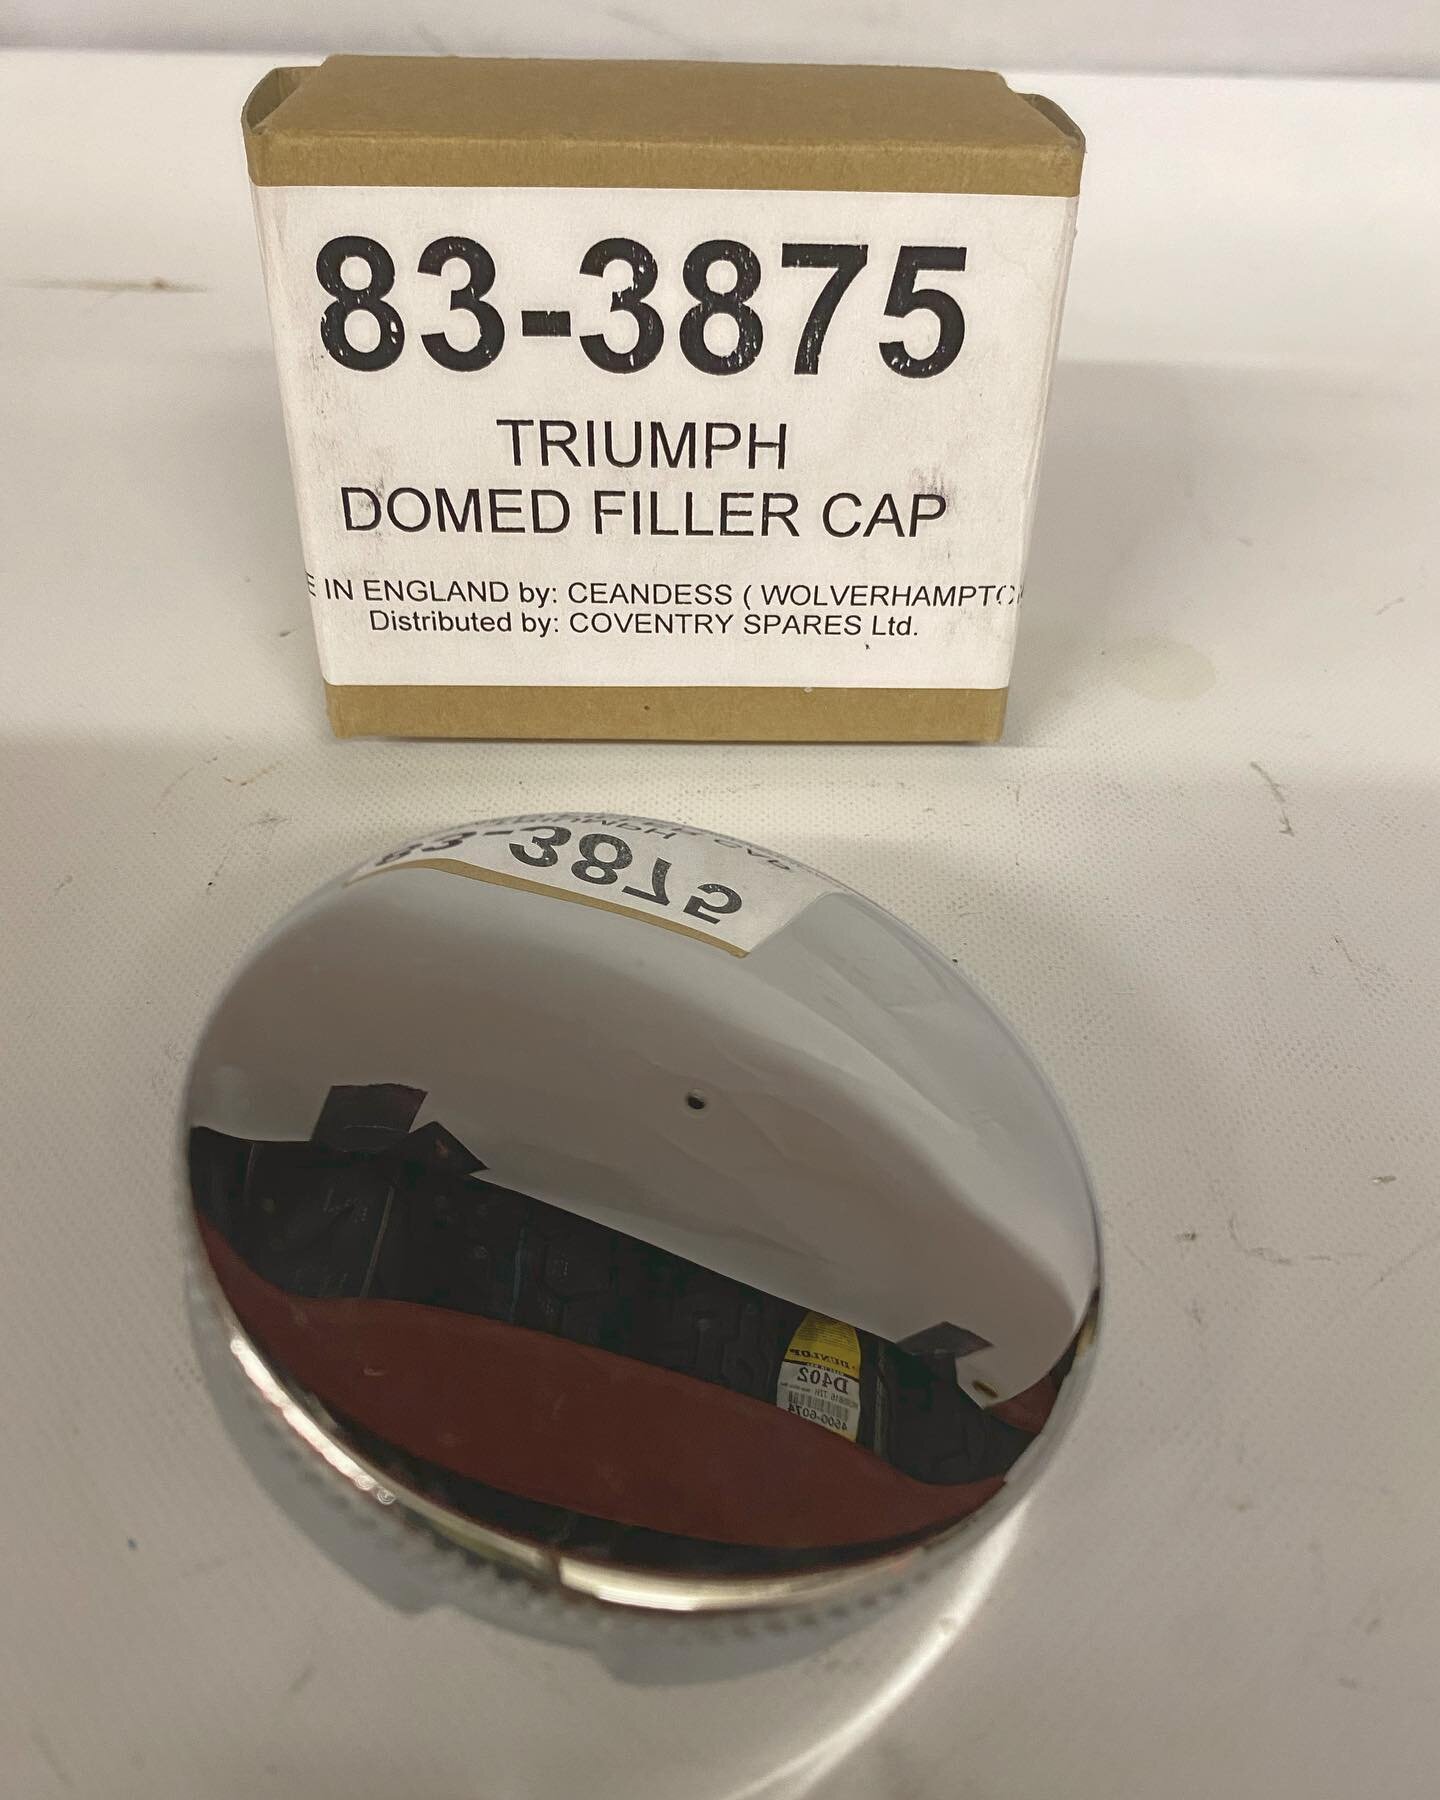 New Triumph Domed Filler Cap.
P/N 83-3875
36.99$ plus shipping 
#wordenscycle #vintagetriumph